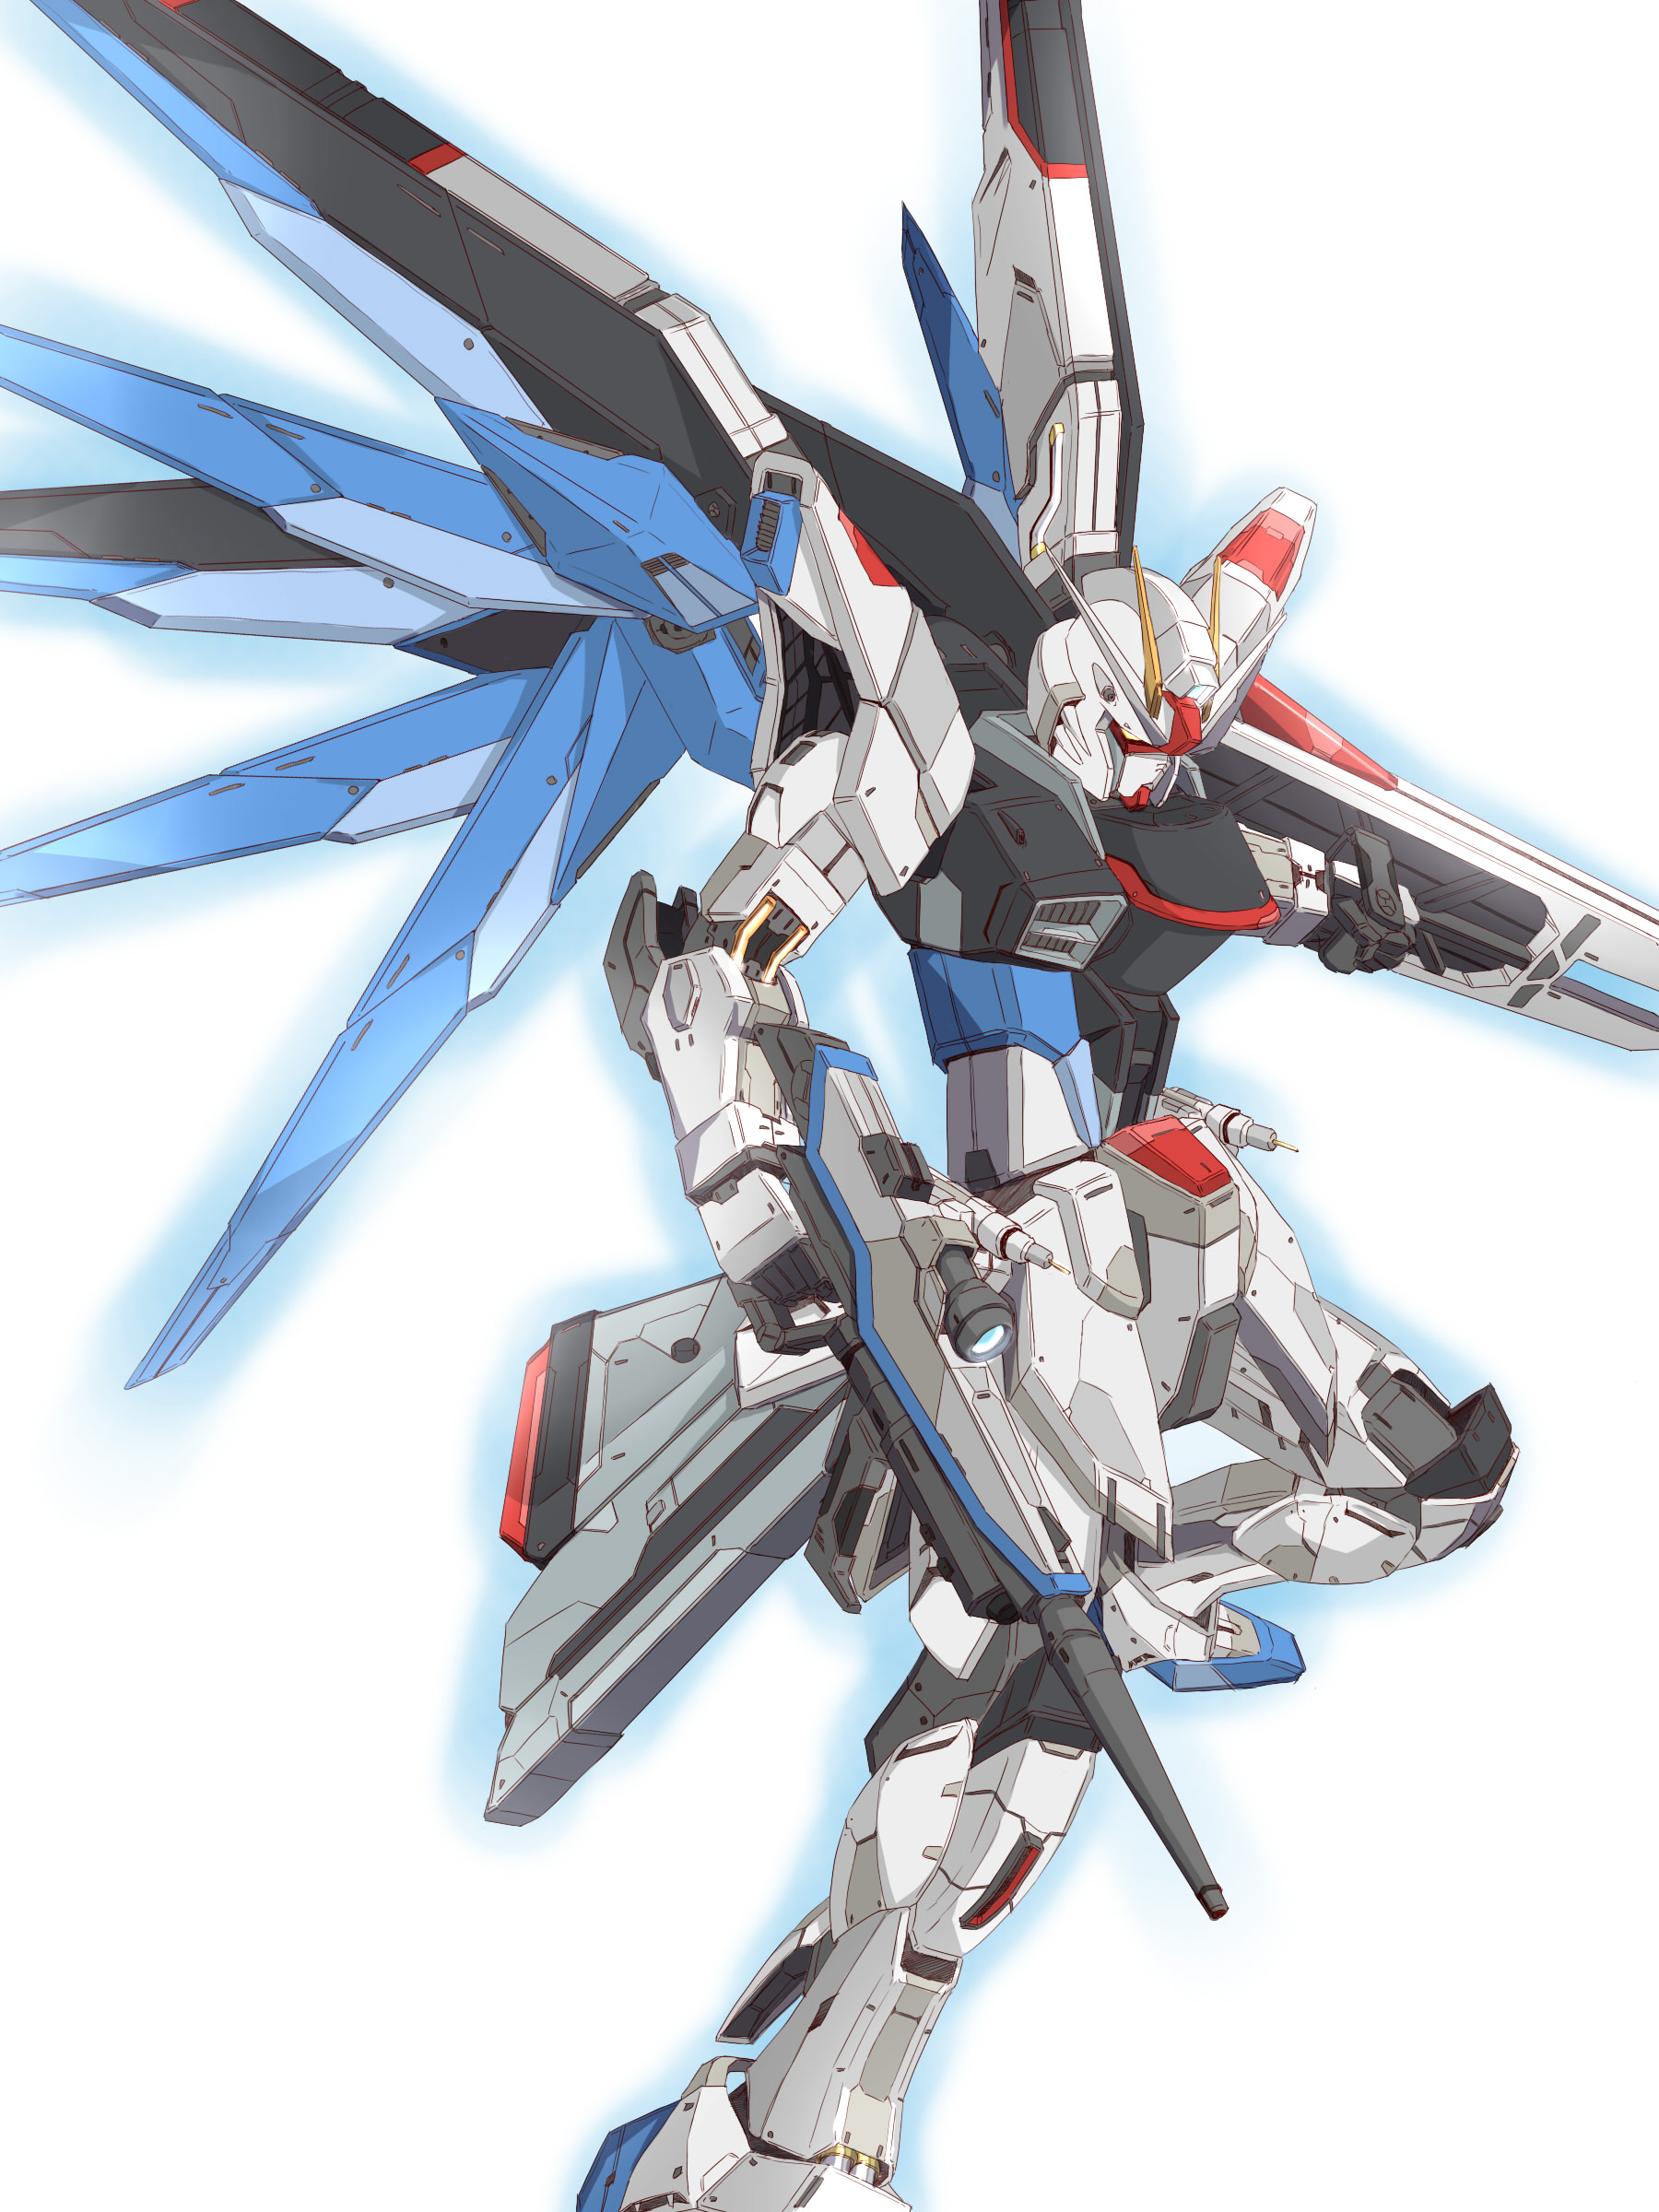 Anime 1800x2400 anime mechs Super Robot Taisen Mobile Suit Gundam SEED Gundam artwork Freedom Gundam fan art digital art